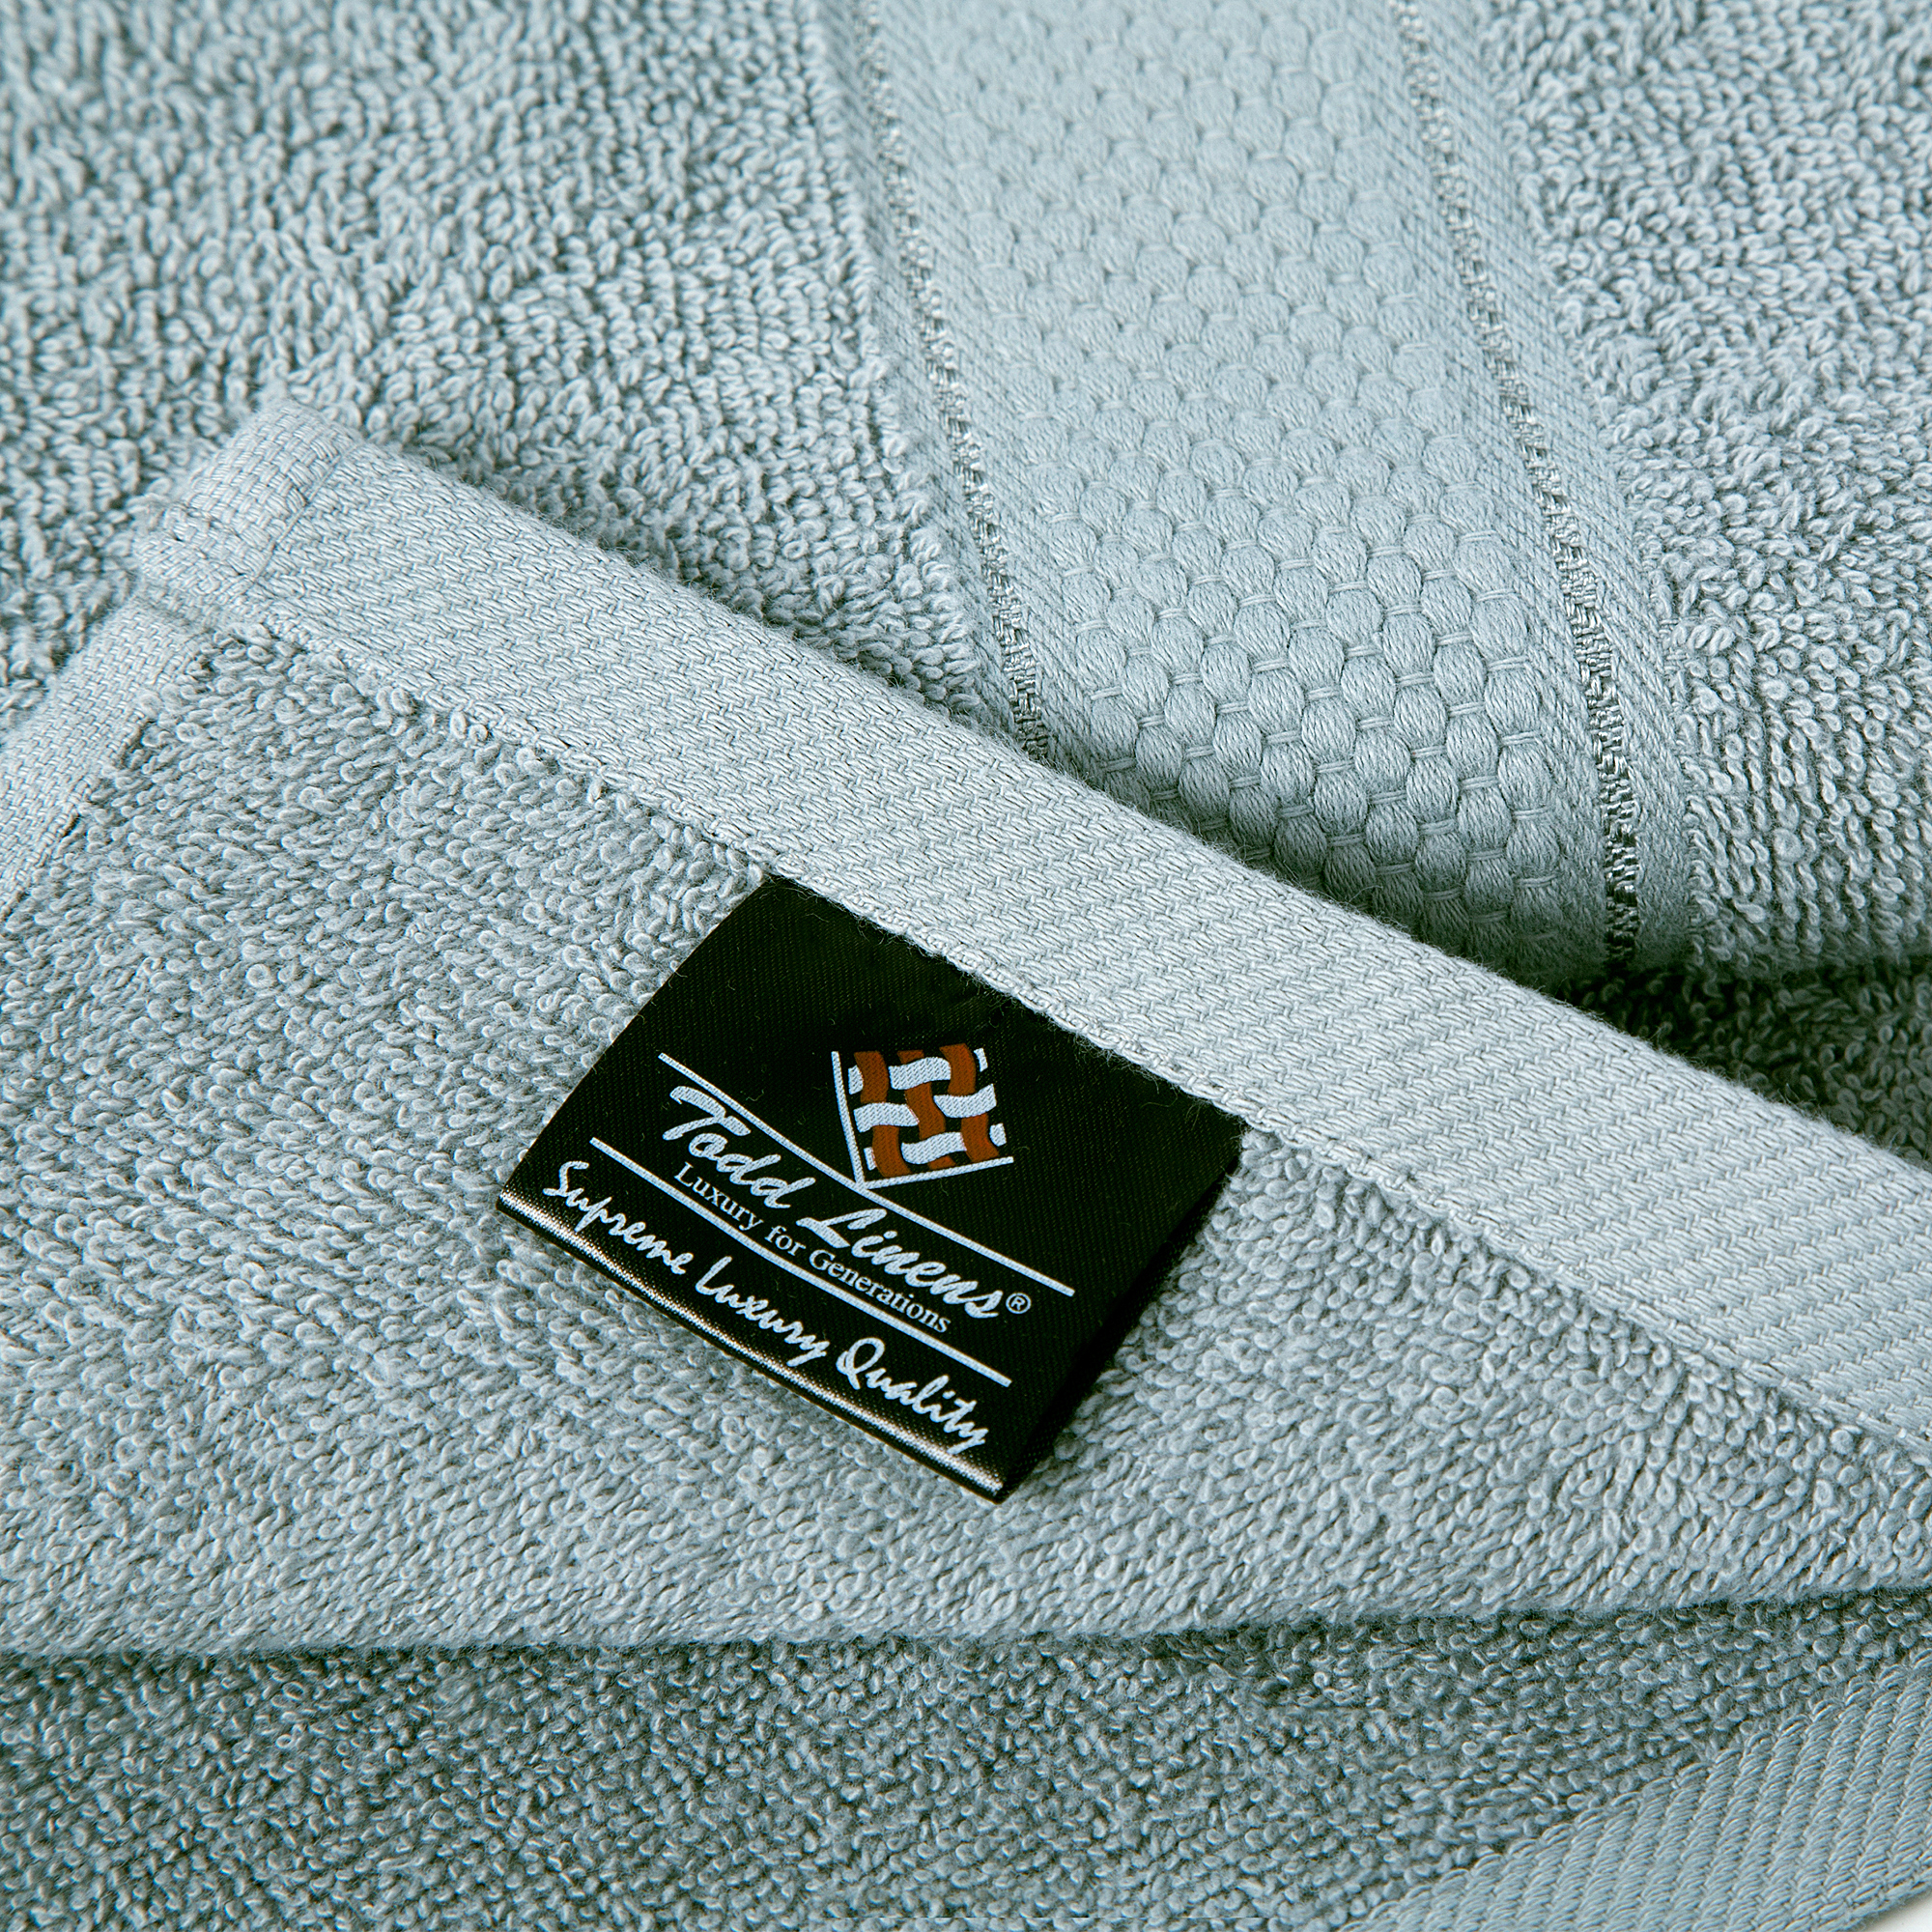 2 Pcs 100 % Cotton Premium Bath Sheet Towel Bale Set Silver Plain